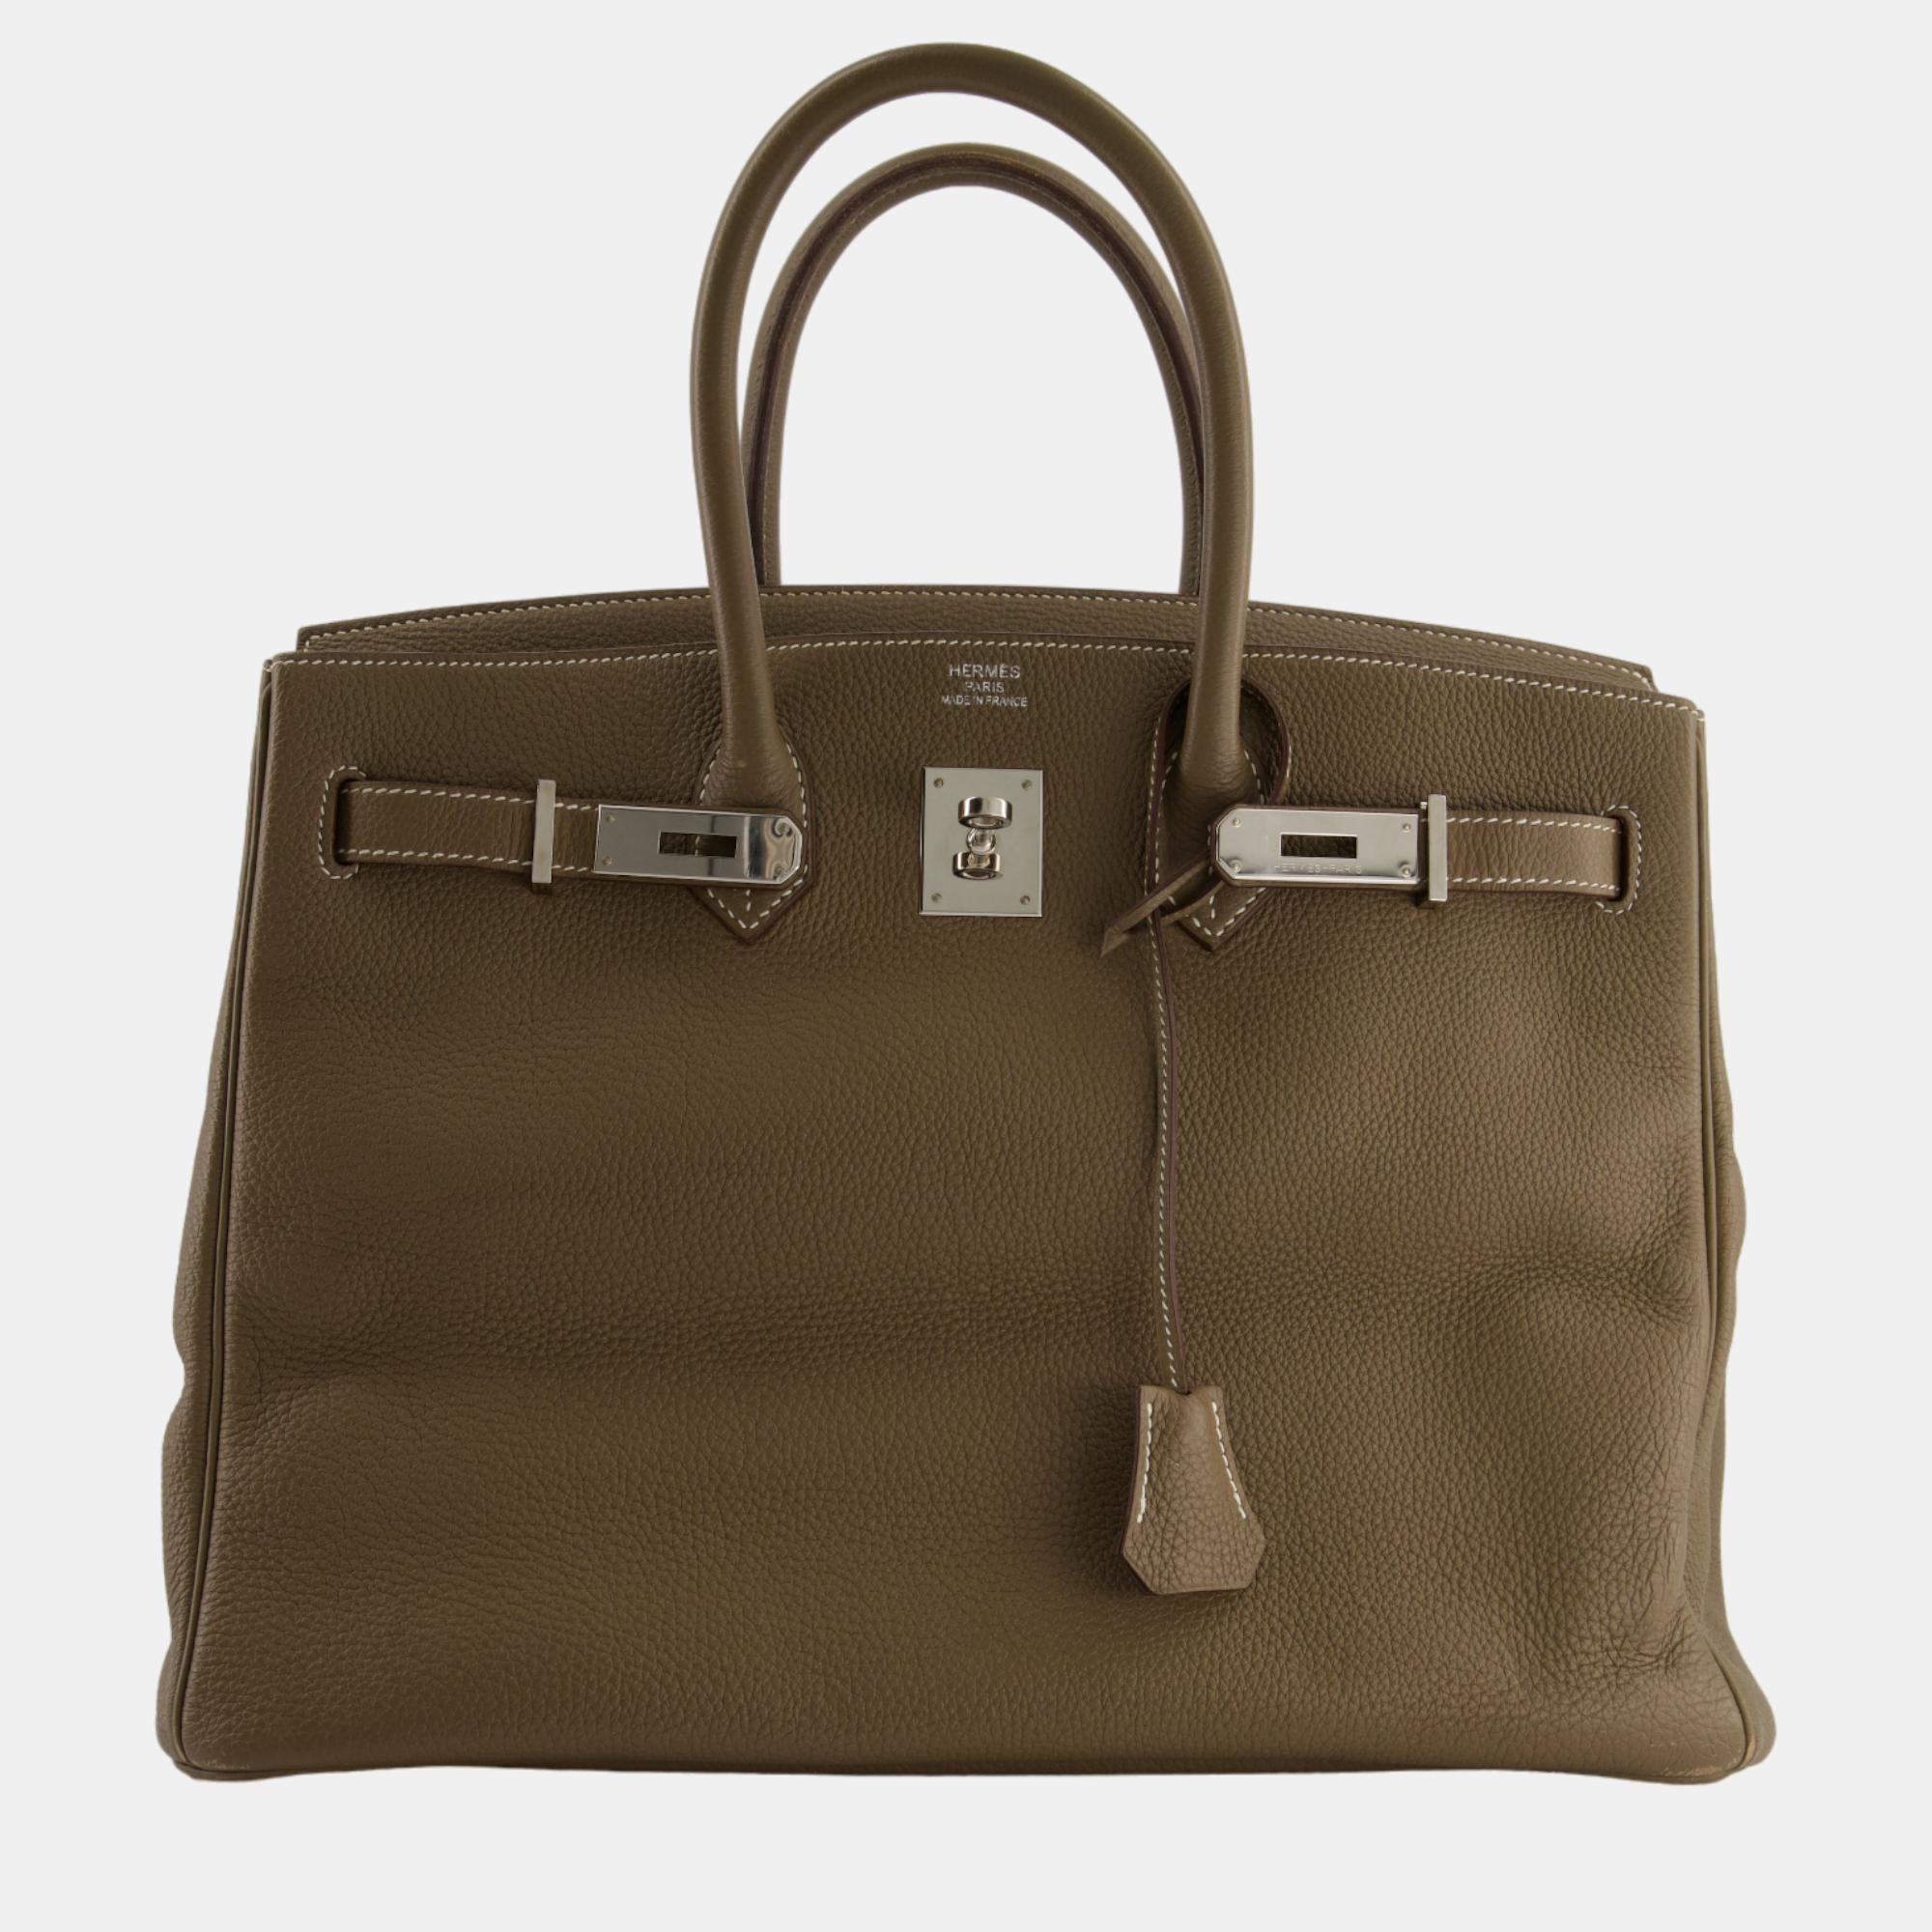 Hermes Birkin 35cm Bag In Etoupe Togo Leather With Palladium Hardware